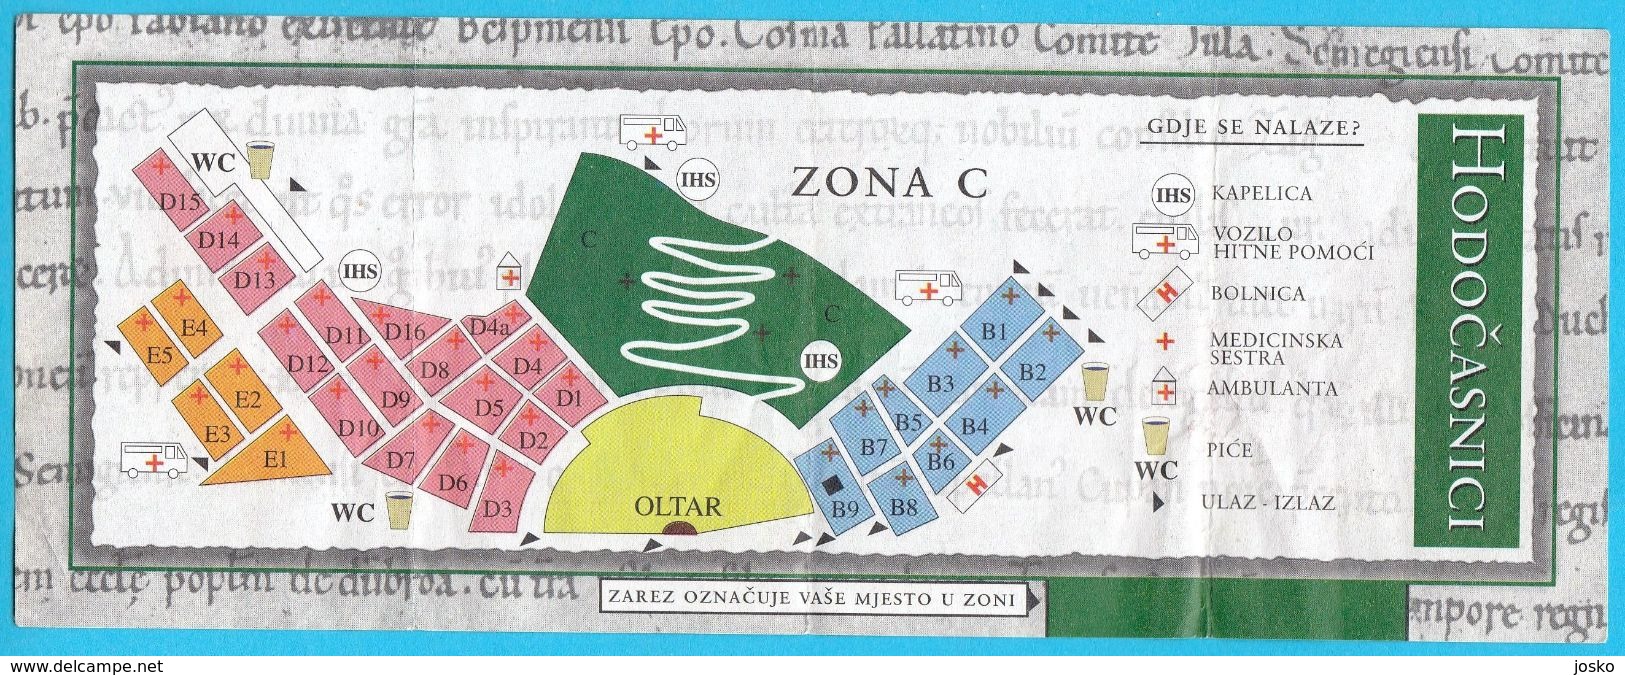 POPE JOHN PAUL II Visit Croatiia (1998.) - Official Ticket * Karol Wojtyla * Billet Biglietto Pape Papst Papa Paus - Programs